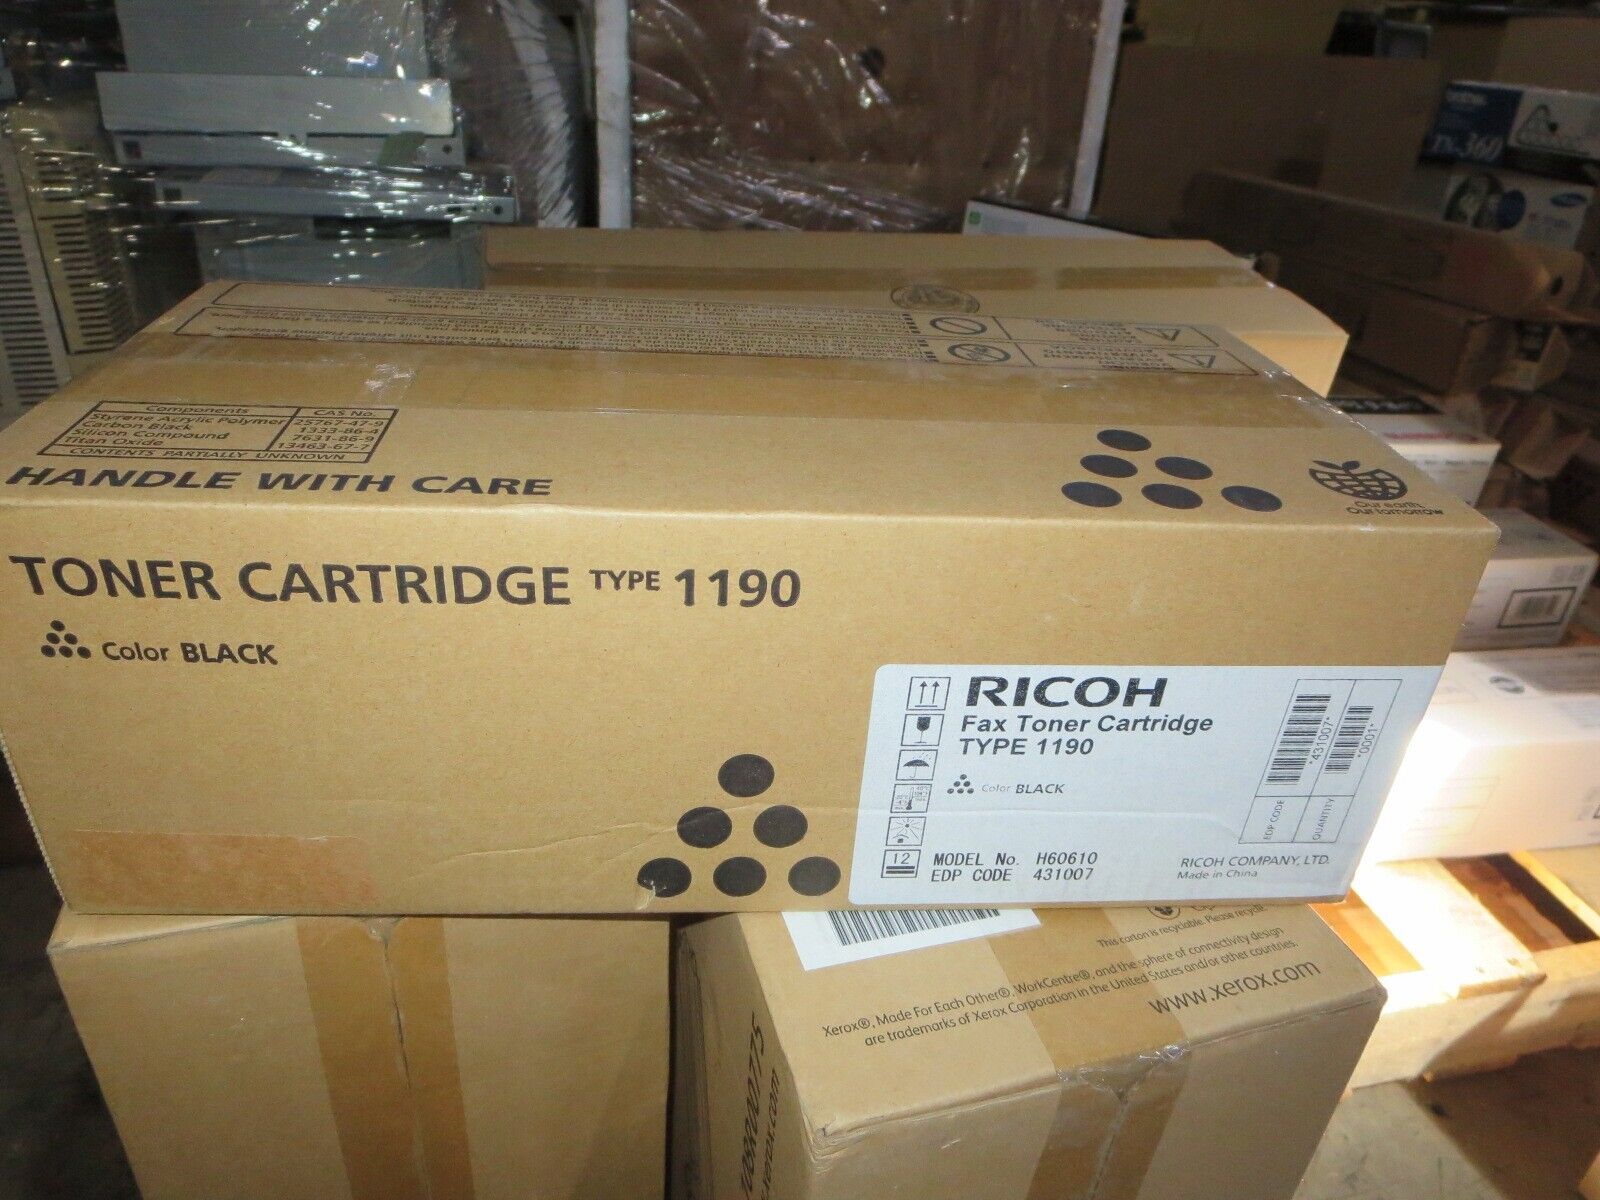 New Genuine Ricoh 431007 Fax Toner Cartridge - Black - Type 1190 Model H60610